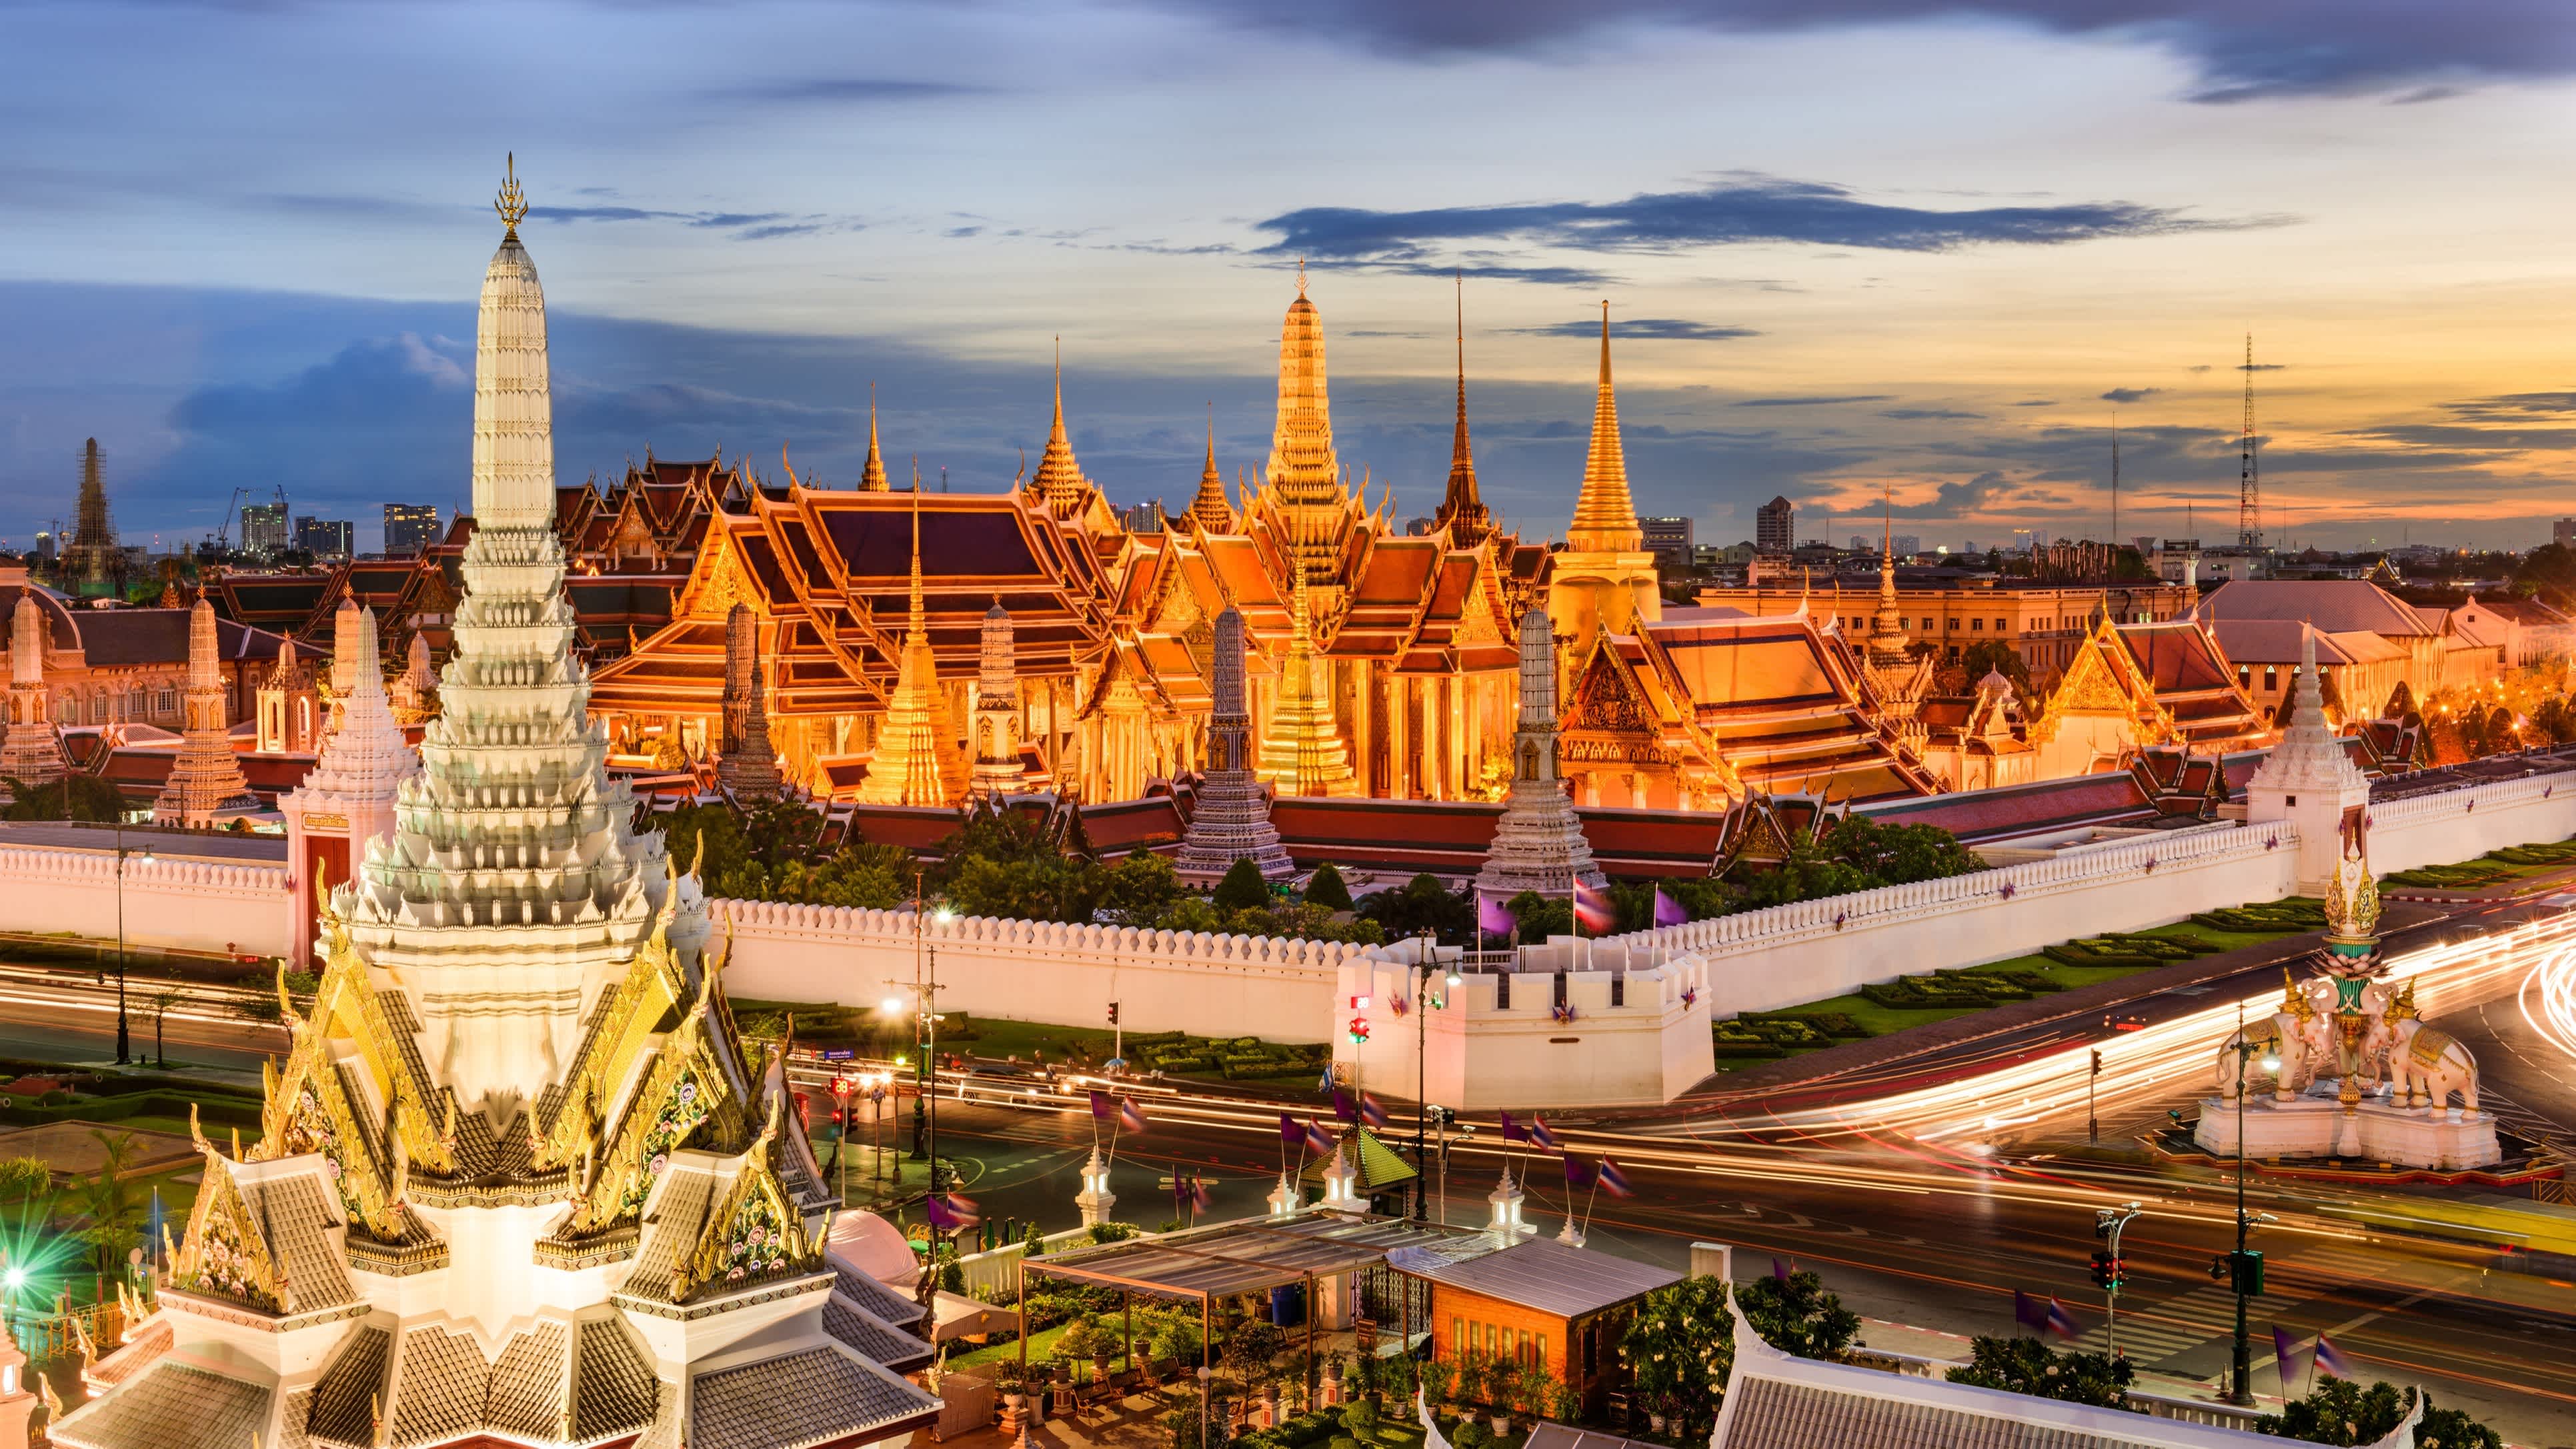 King_temple_in_Bangkok_Thailand